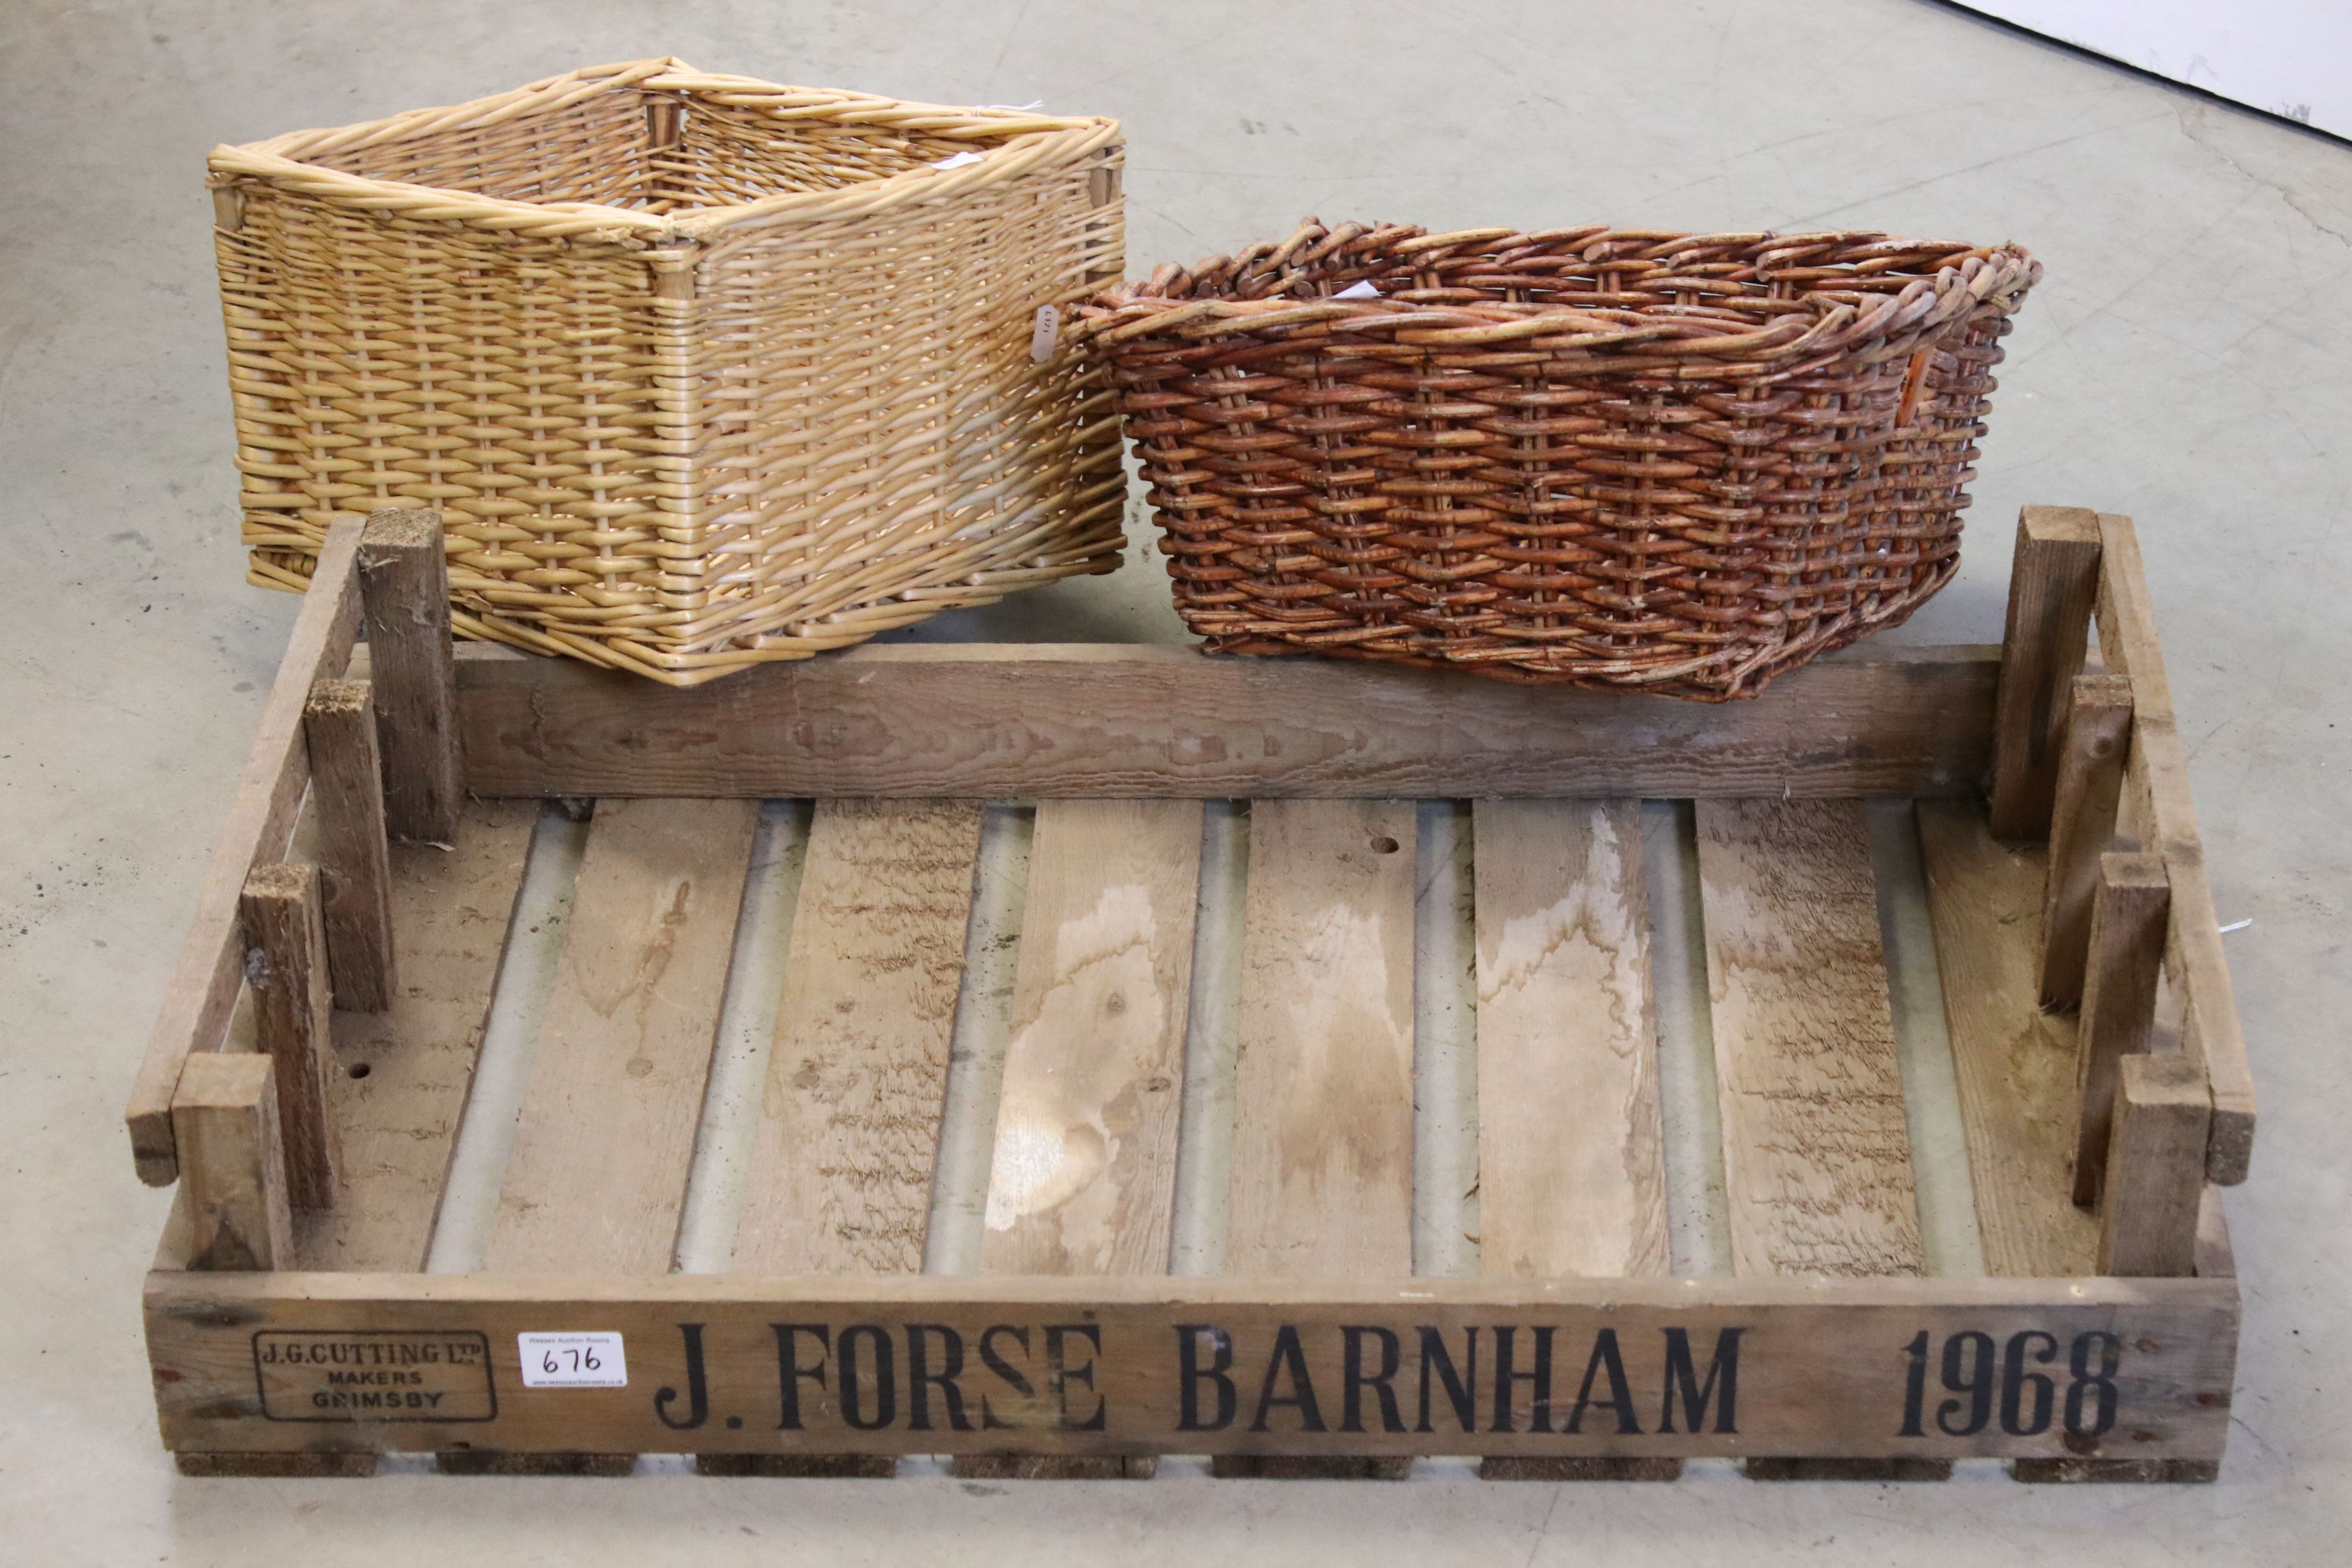 Wooden Apple Tray / Crate marked J Horse Barnham 1968 '